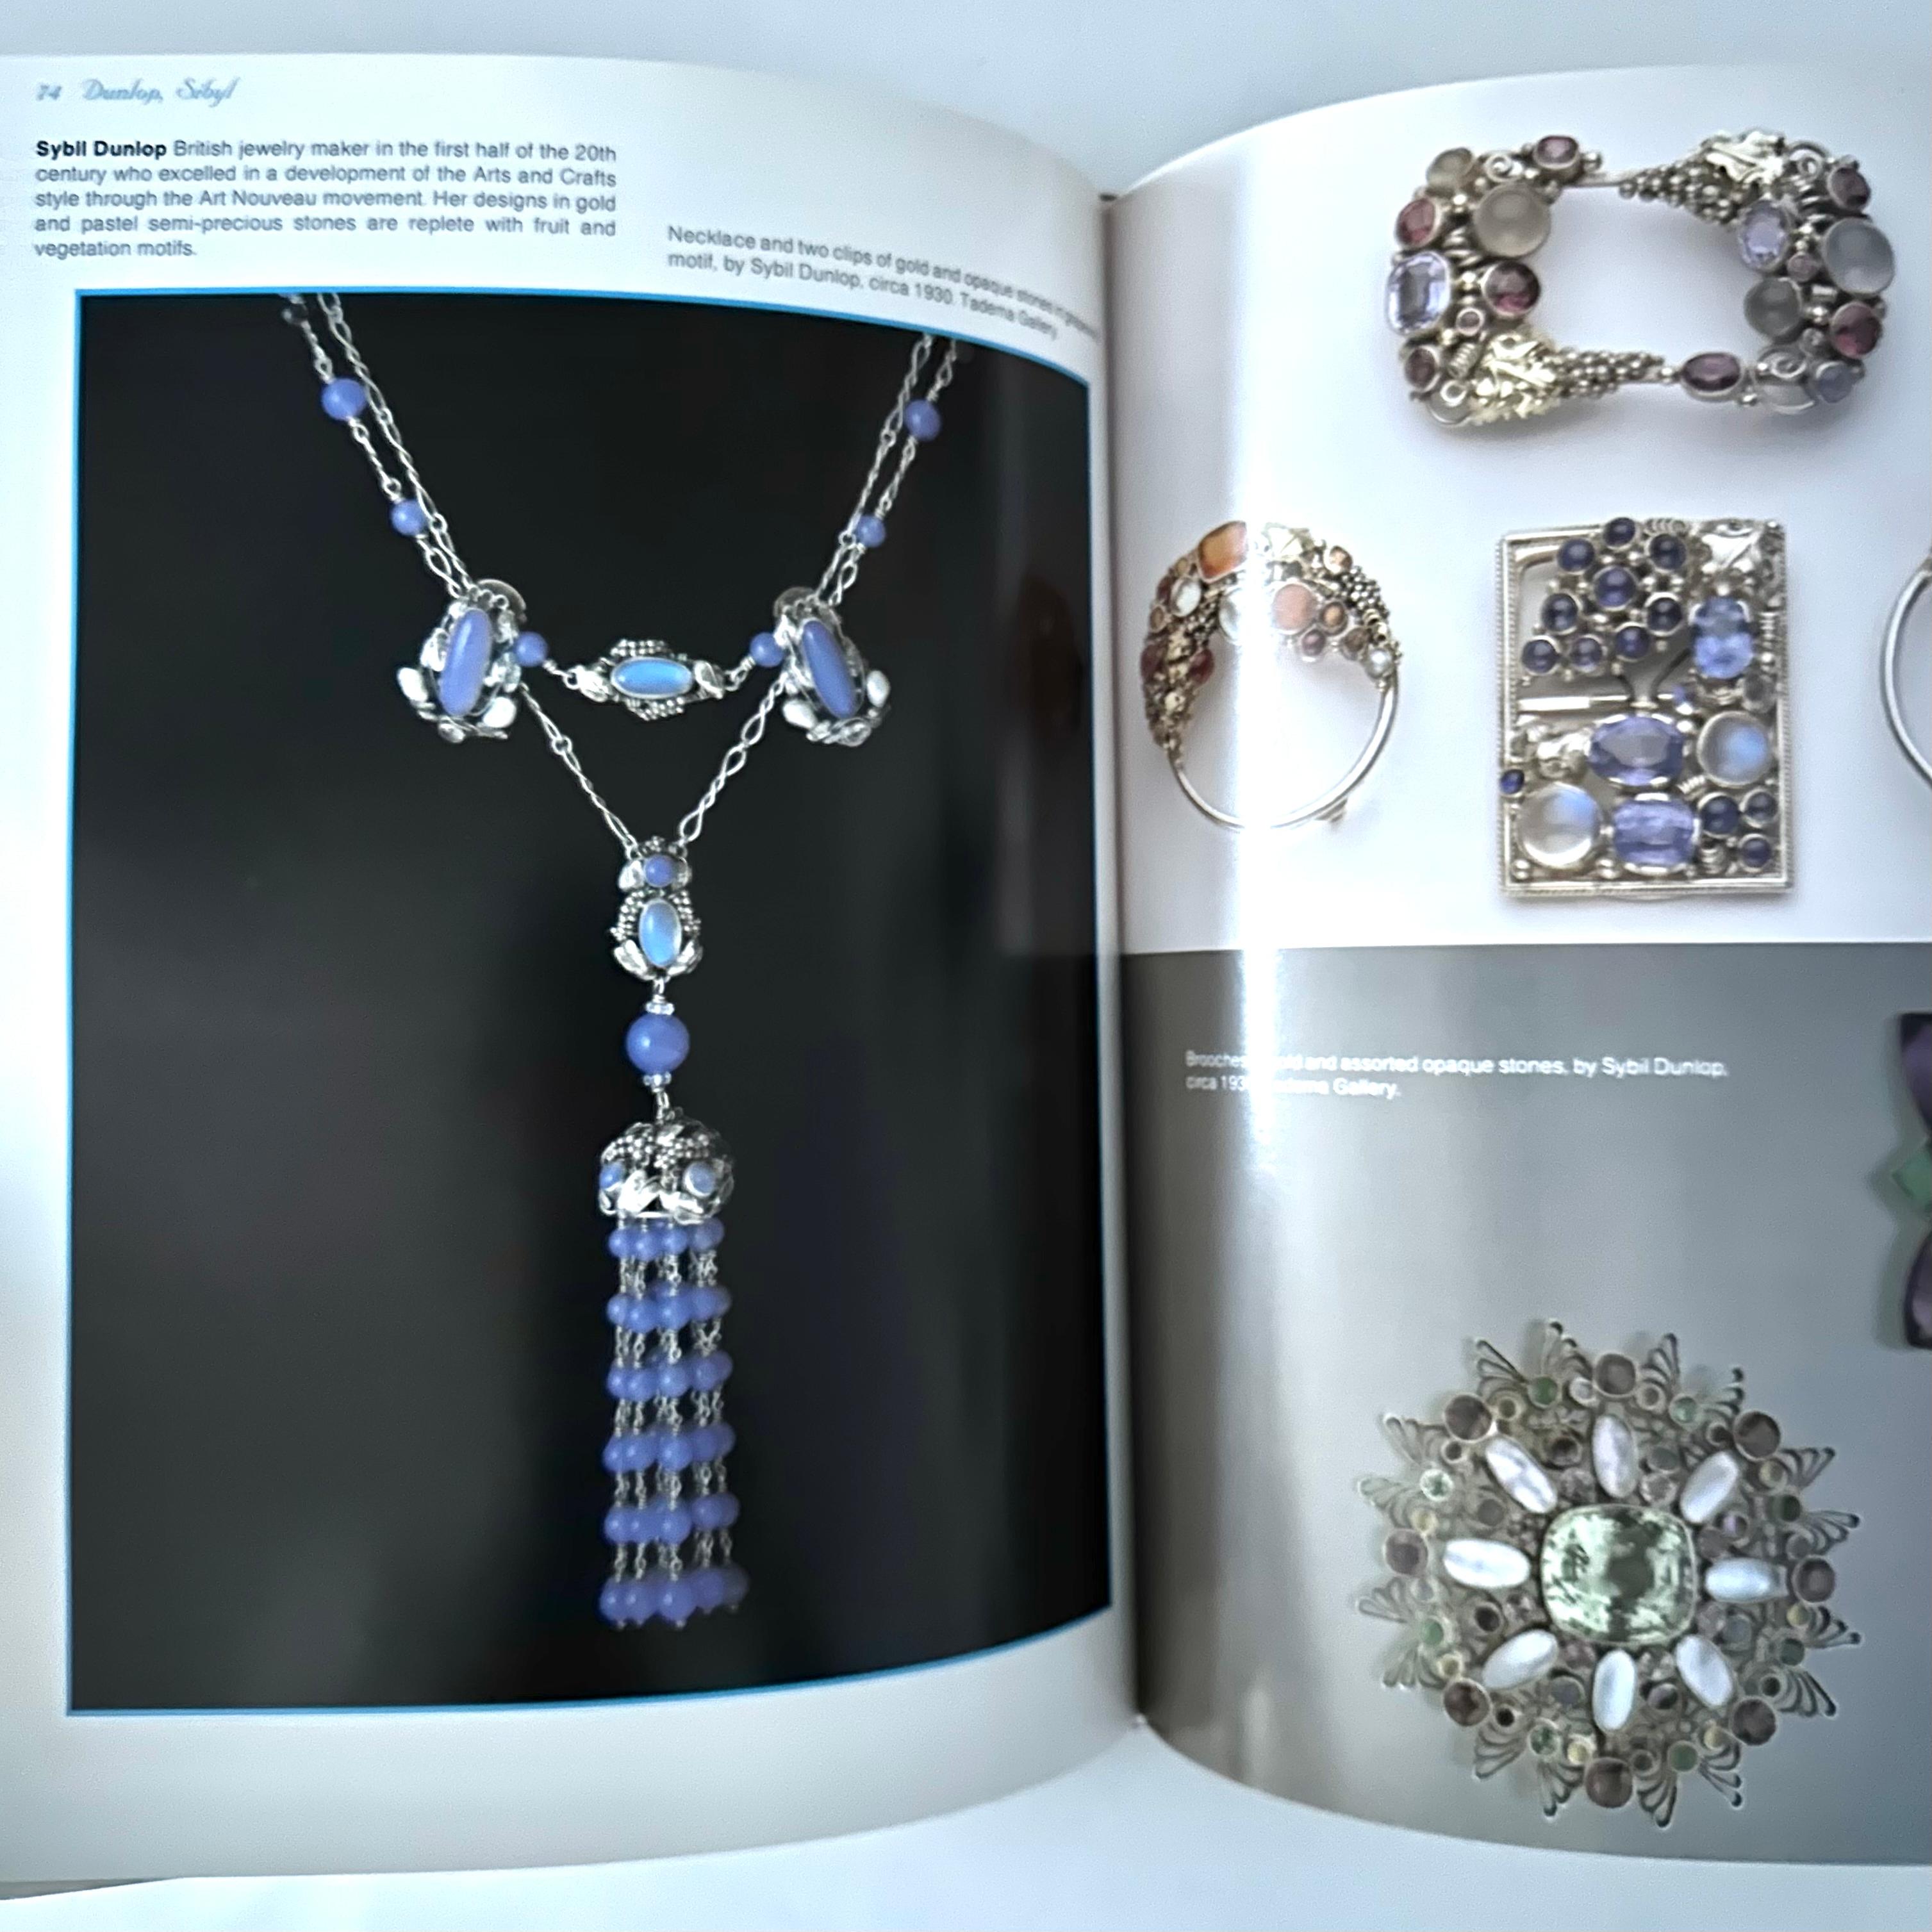 Handbook of Fine Jewelry - Nancy N. Schiffer - 1st edition, 1991 1